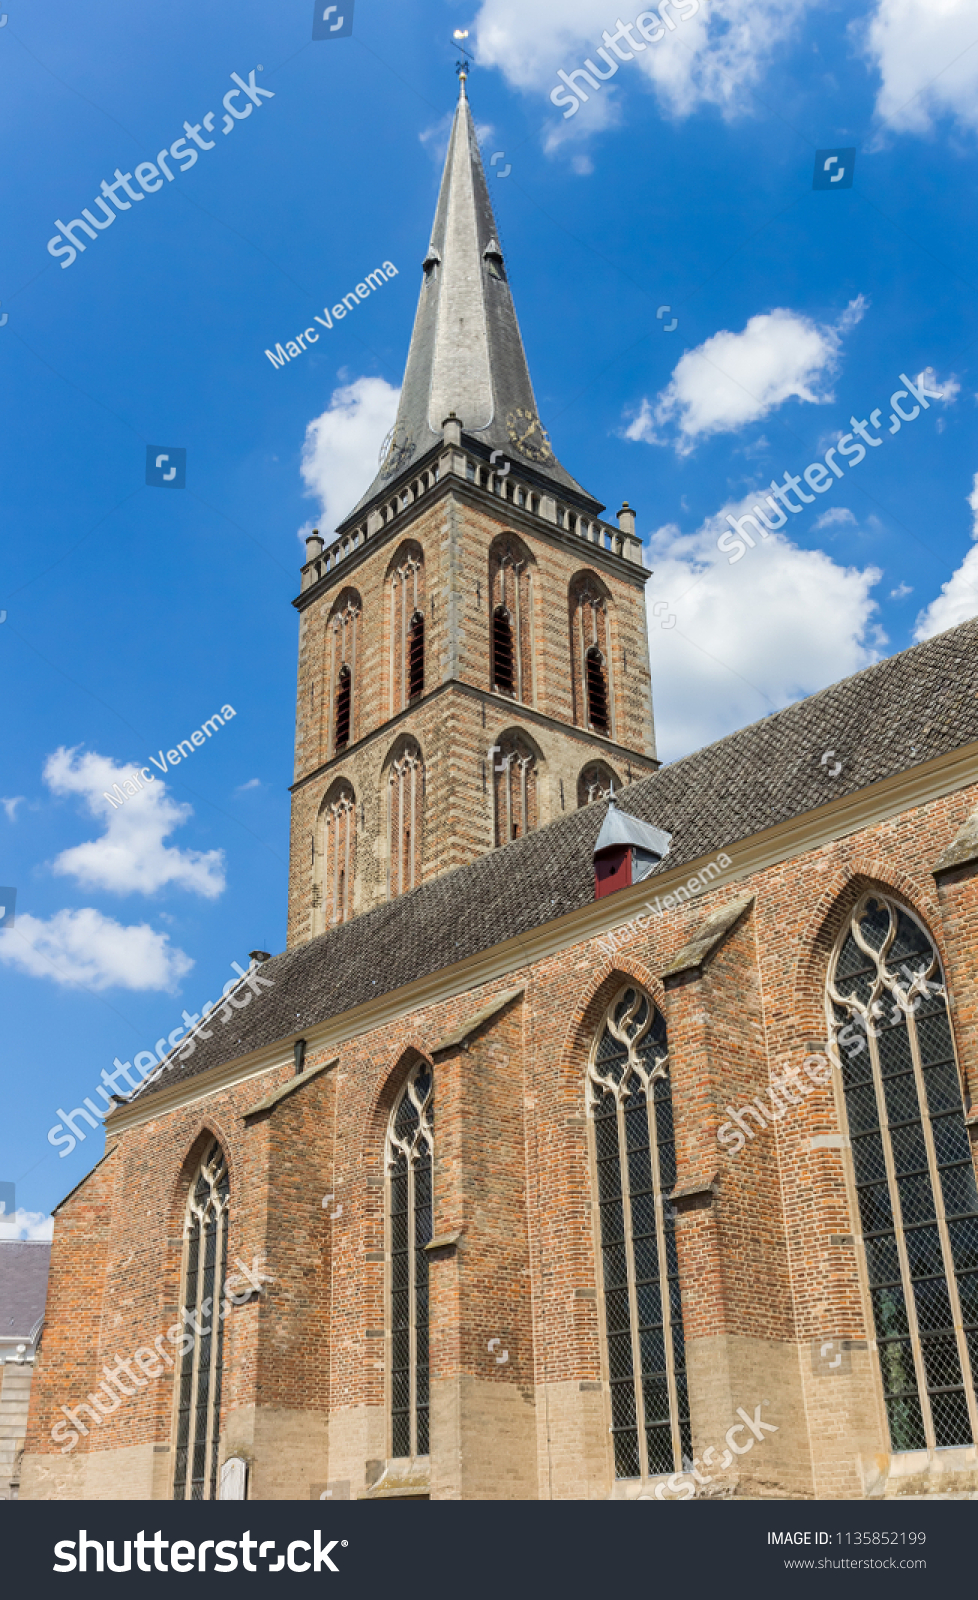 Tower of the Gudula church in Lochem, Netherlands #1135852199